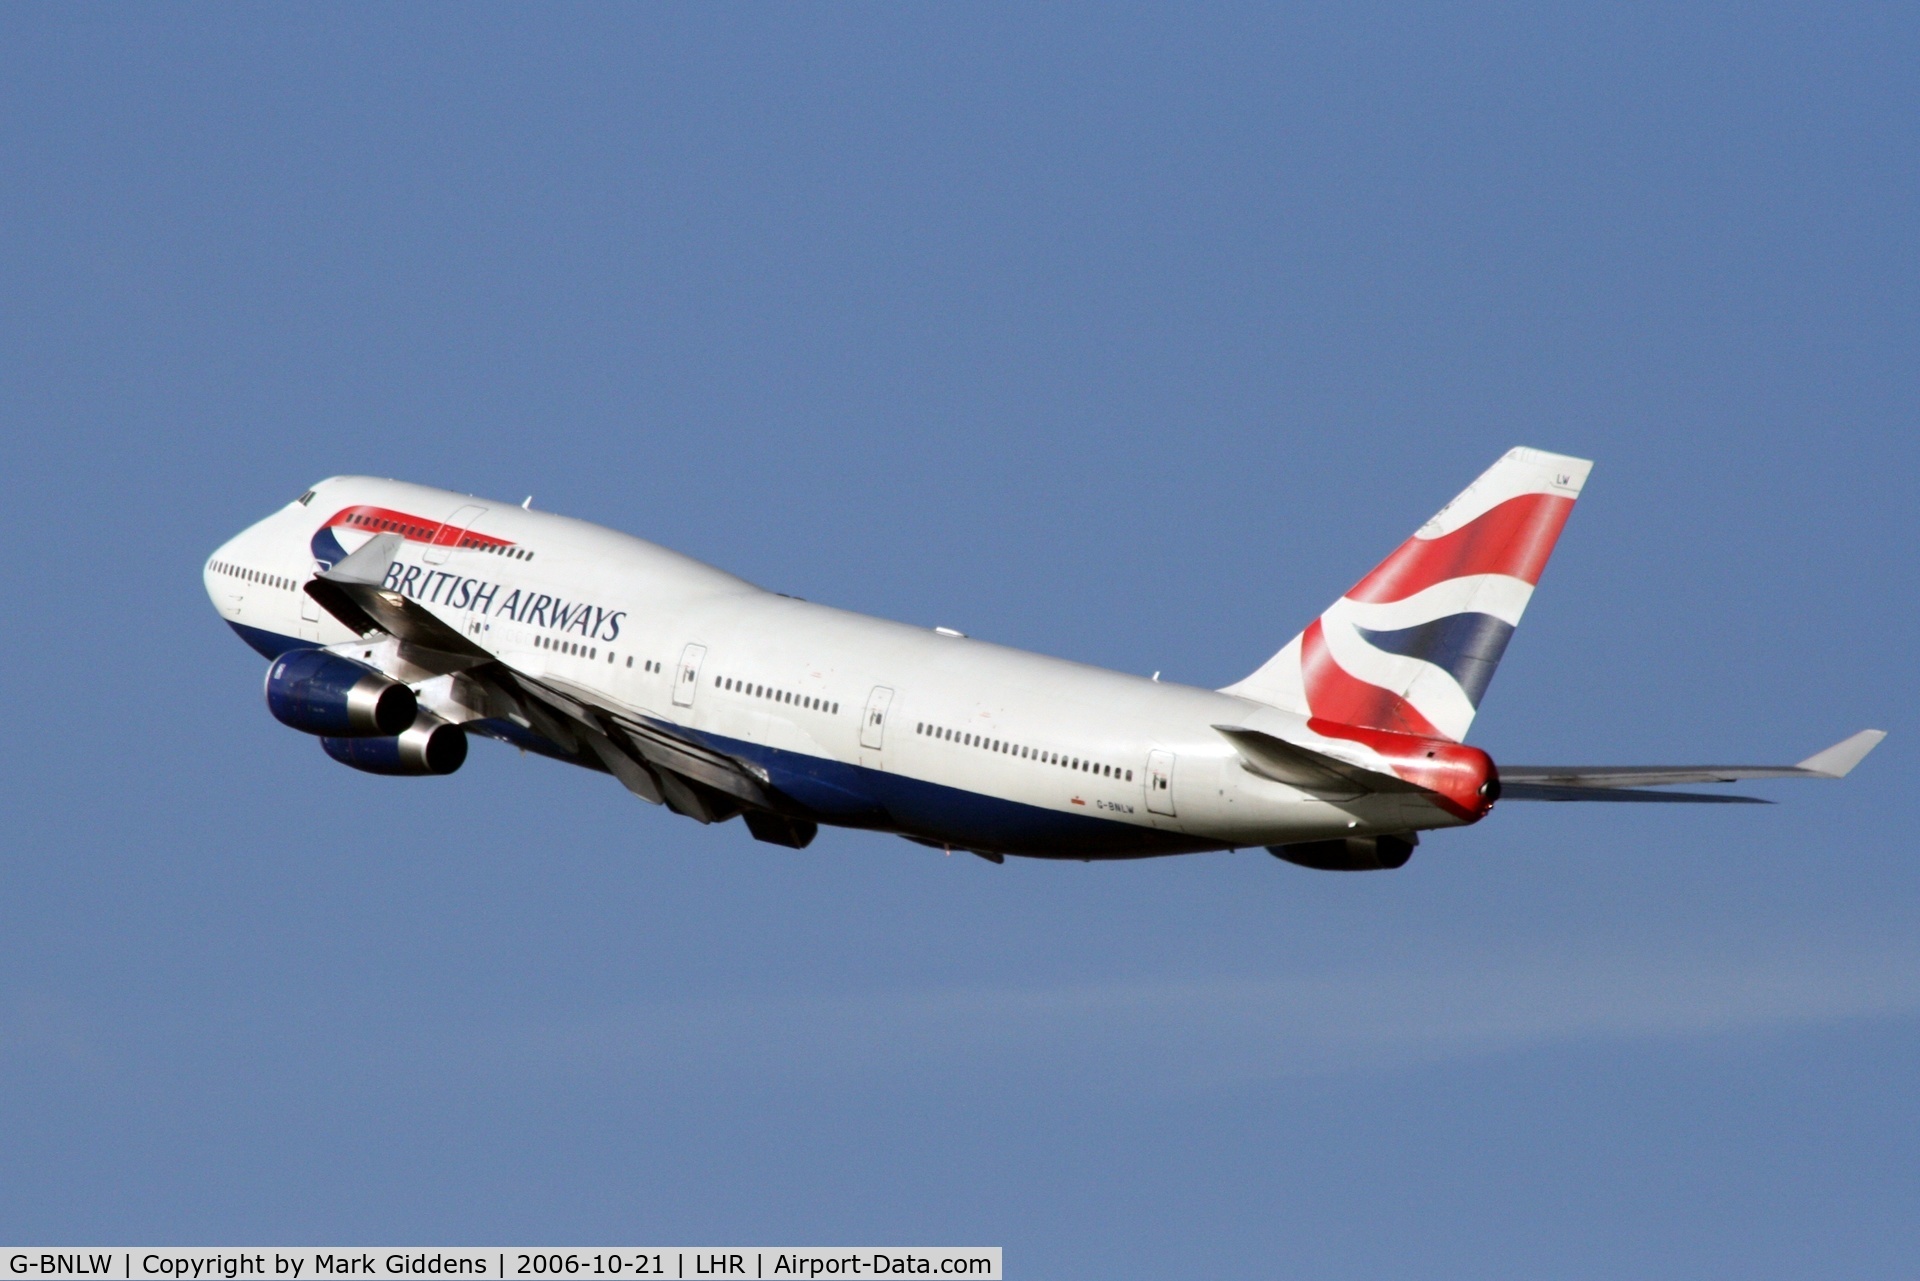 G-BNLW, 1992 Boeing 747-436 C/N 25432, Departing from London Heathrow